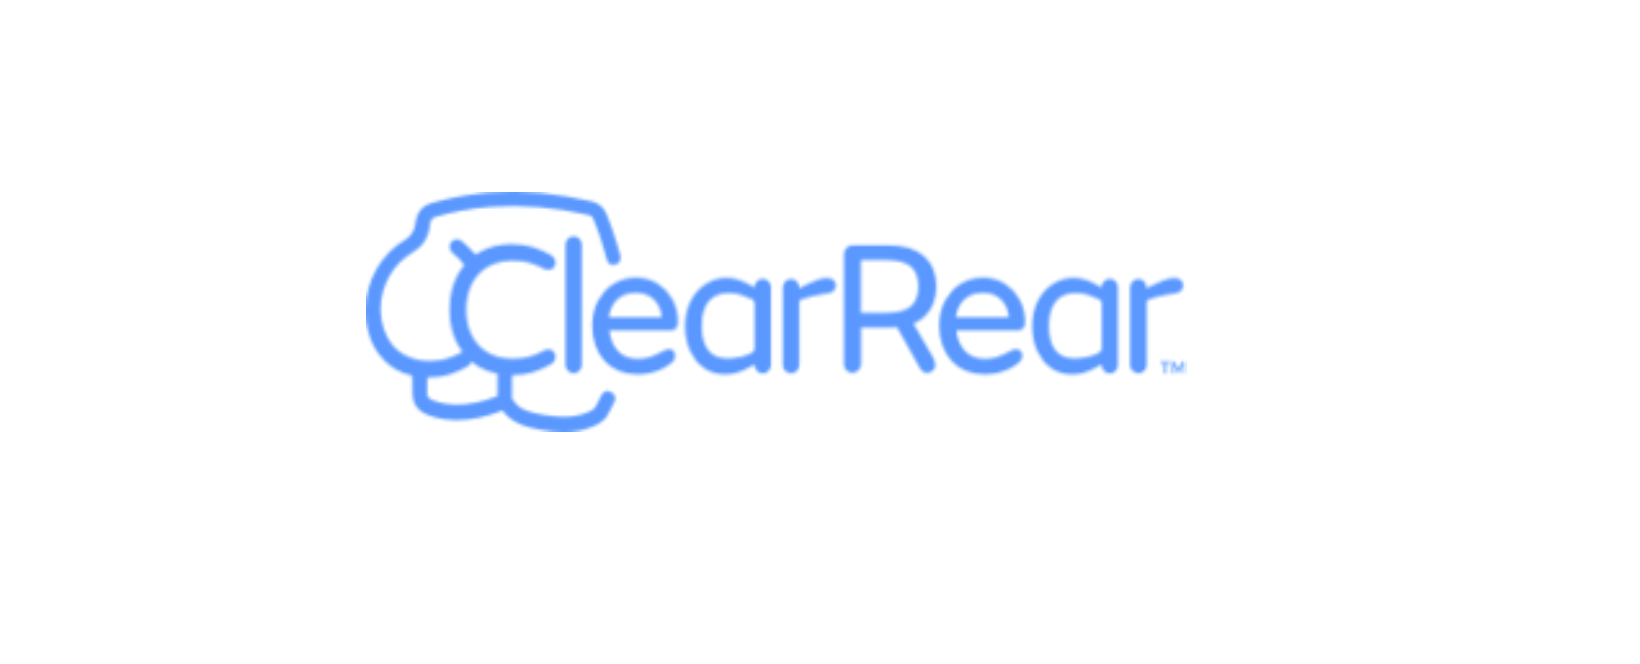 Clear Rear Discount Code 2022